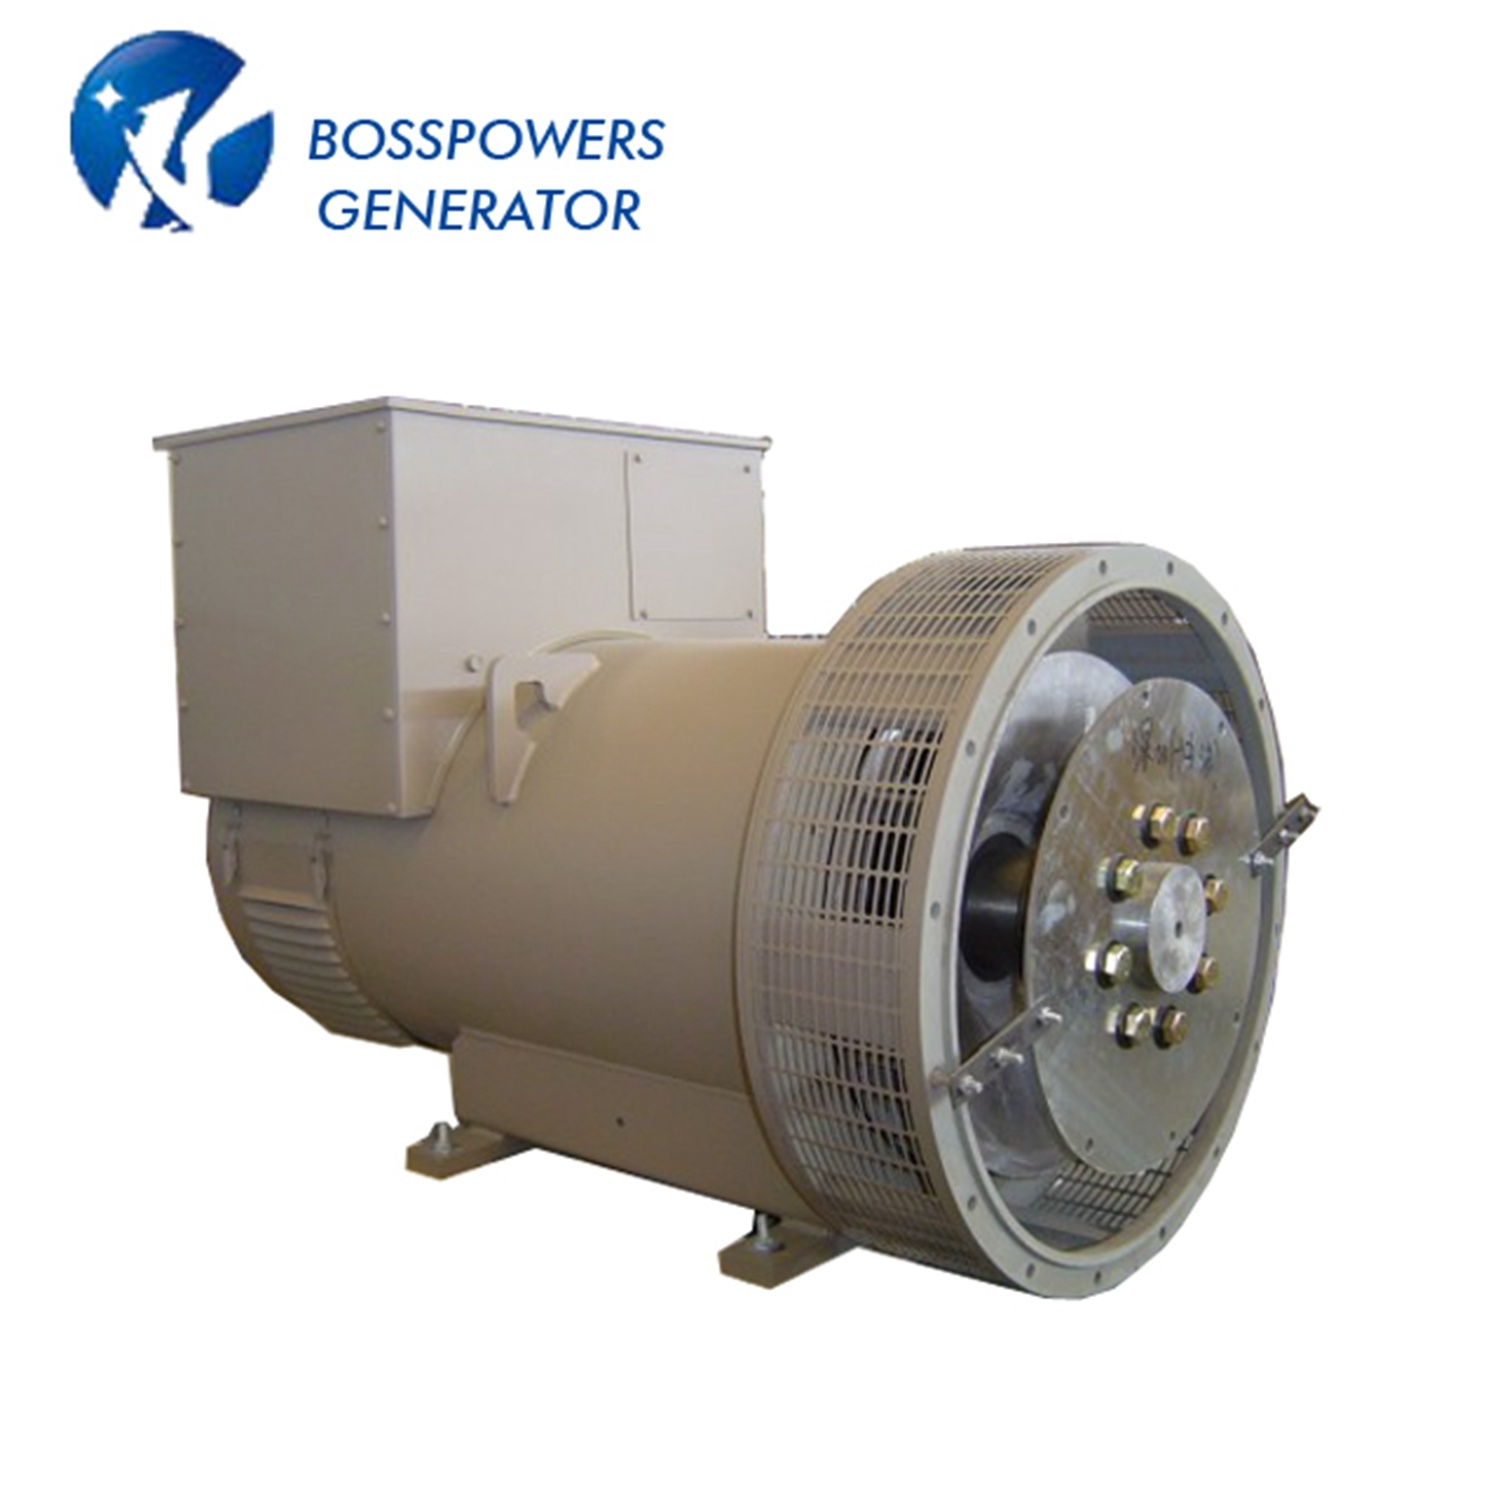 50Hz BS274c 100kVA Stamford Technology AC Alternaor Brushless Generator